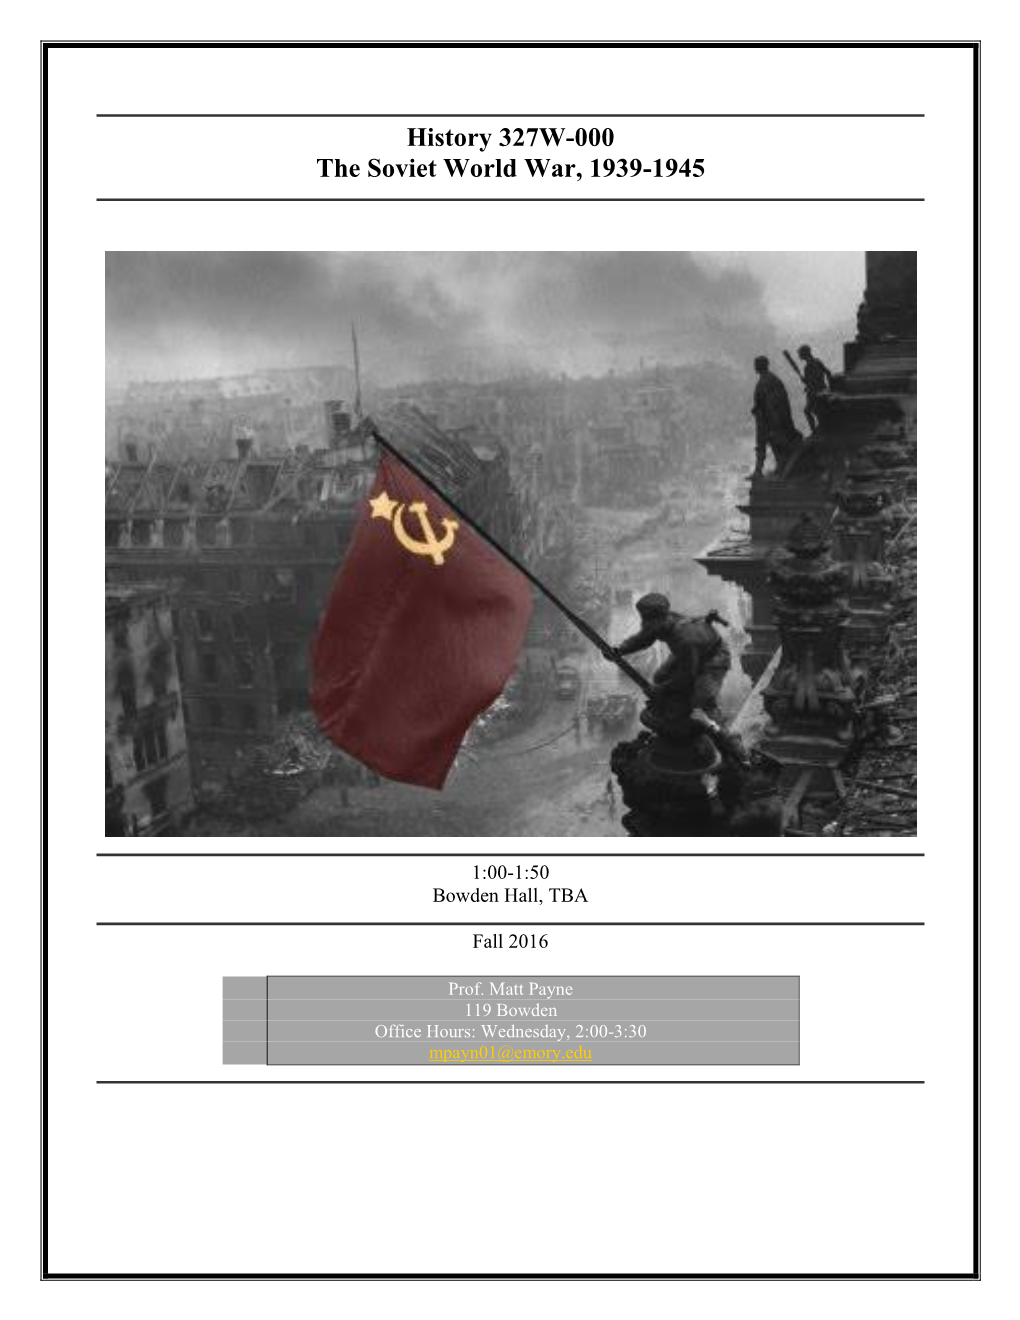 History 327W-000 the Soviet World War, 1939-1945